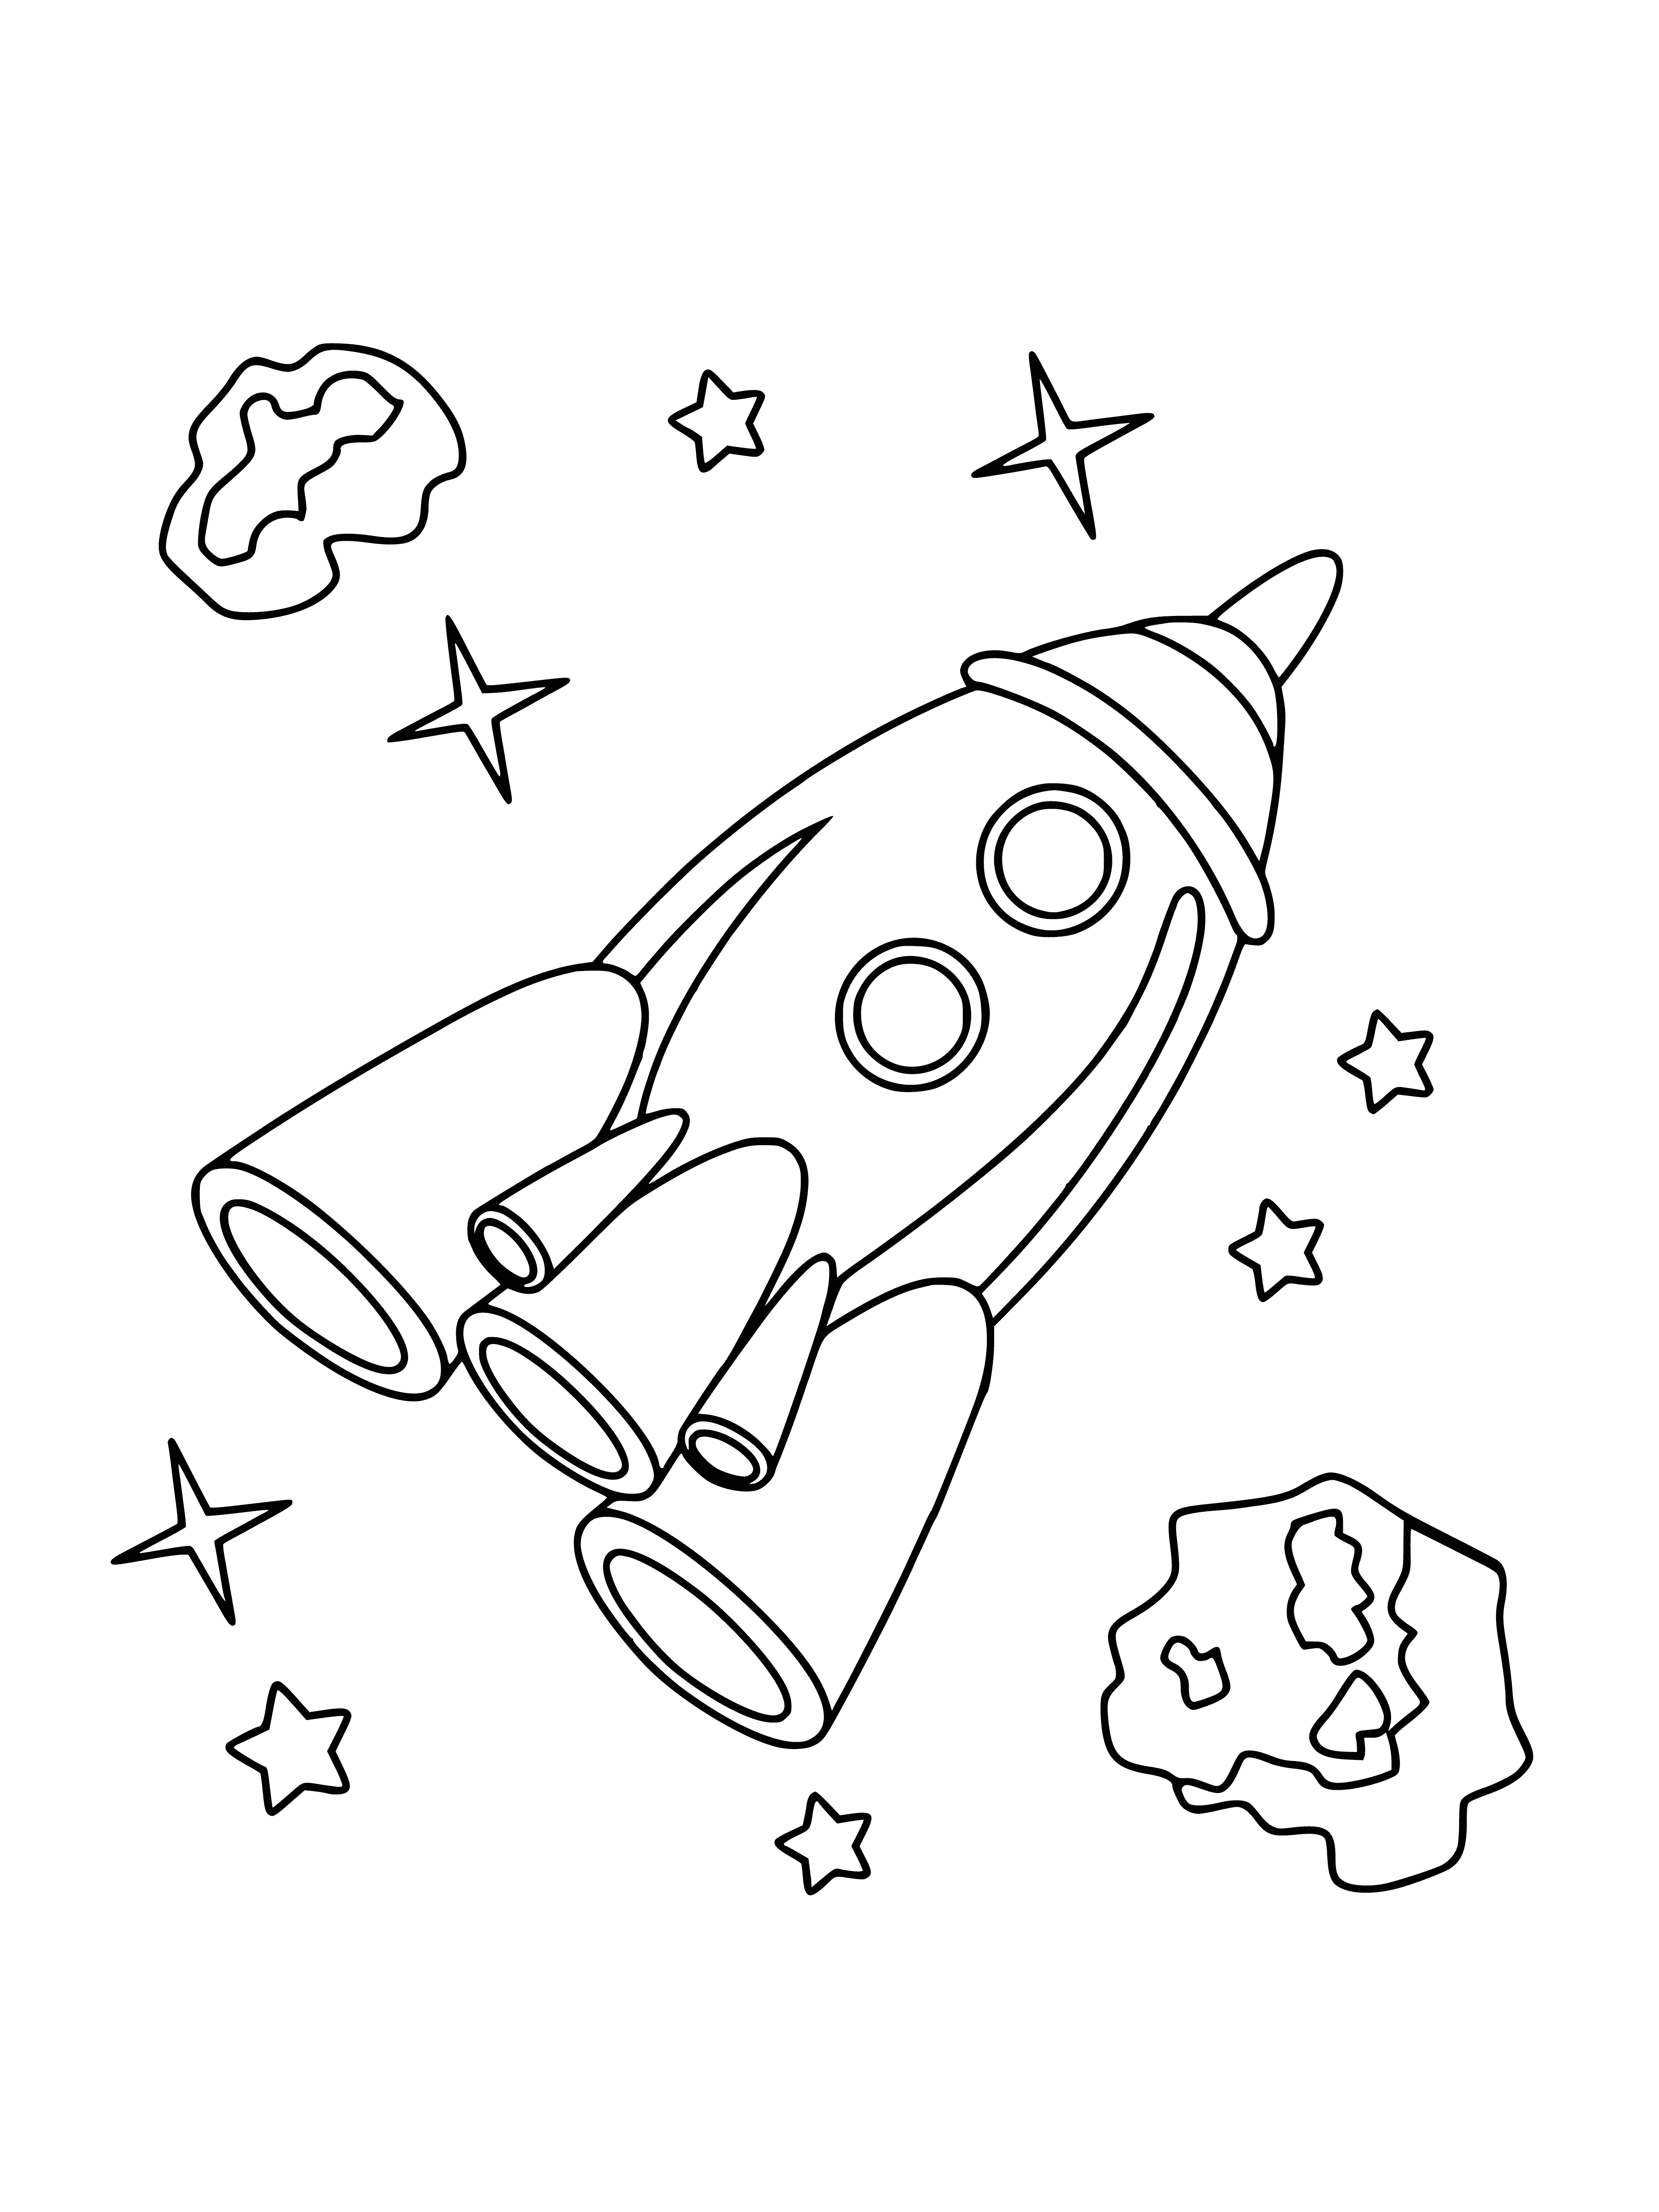 Rocket coloring page